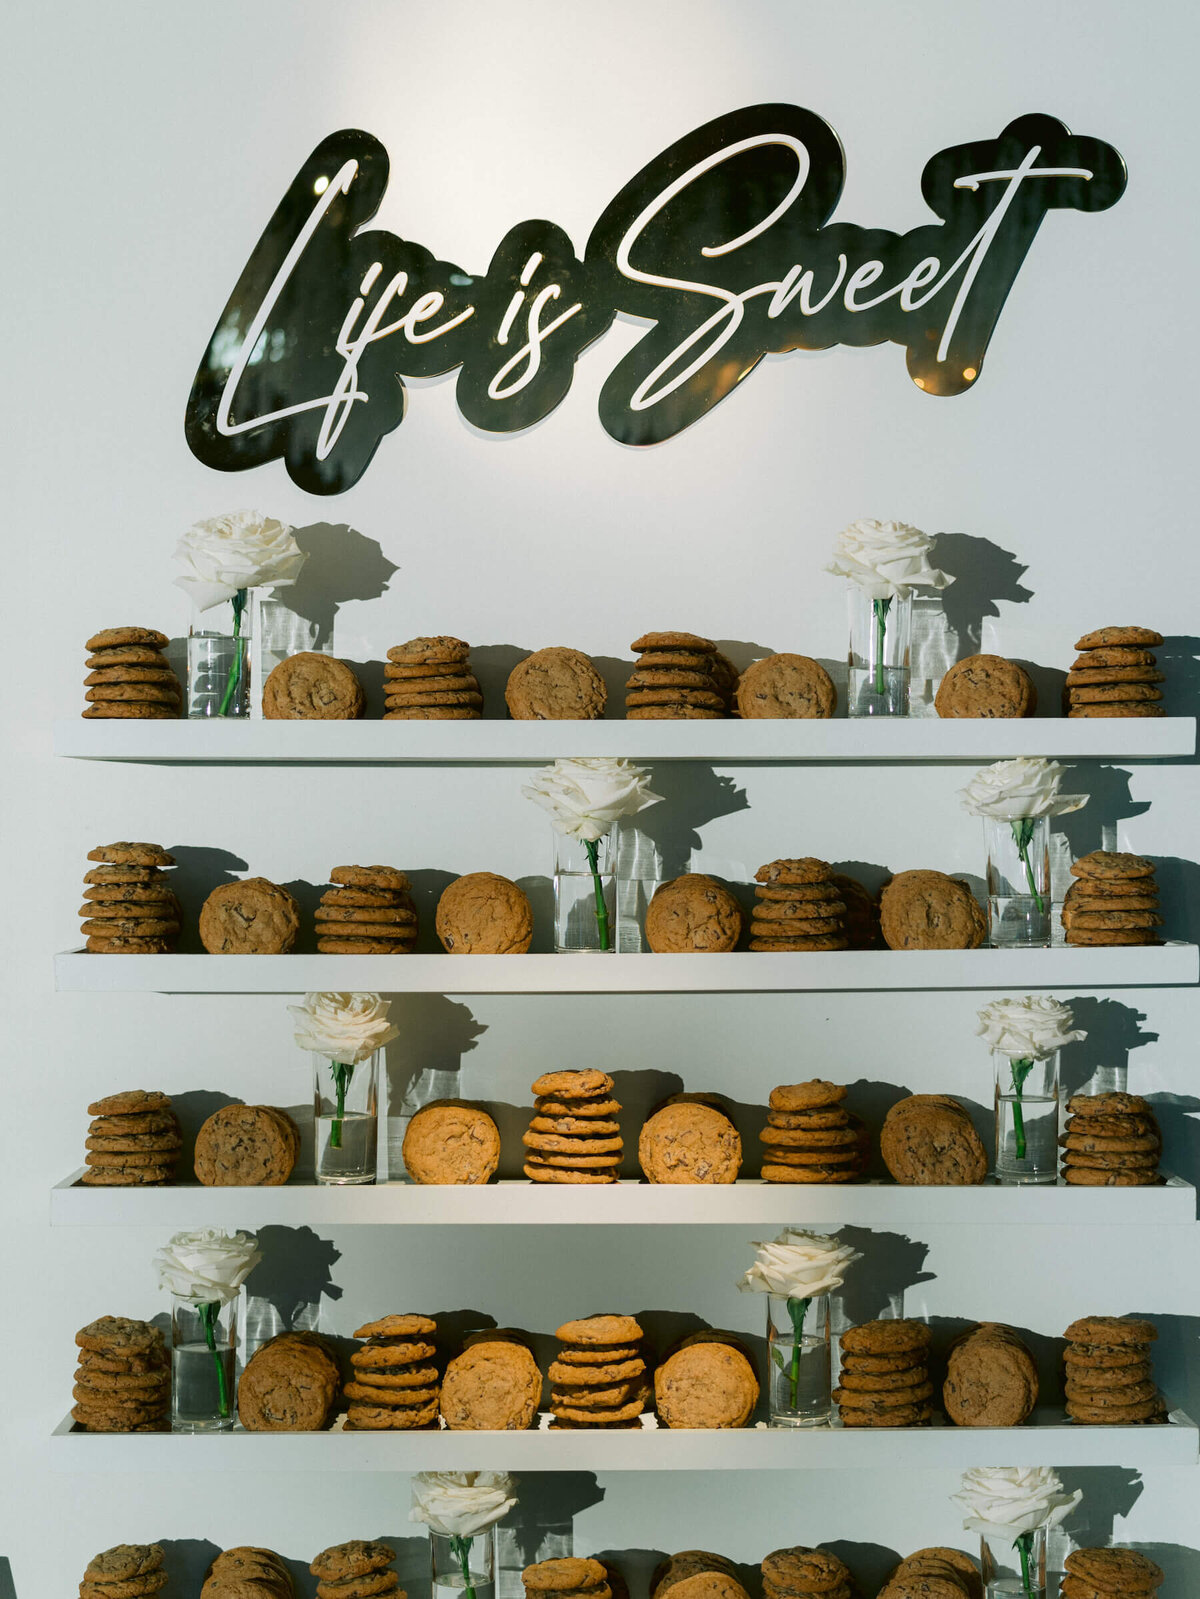 Life is Sweet dessert wall Ritz Carlton chocolate chip cookie recipe